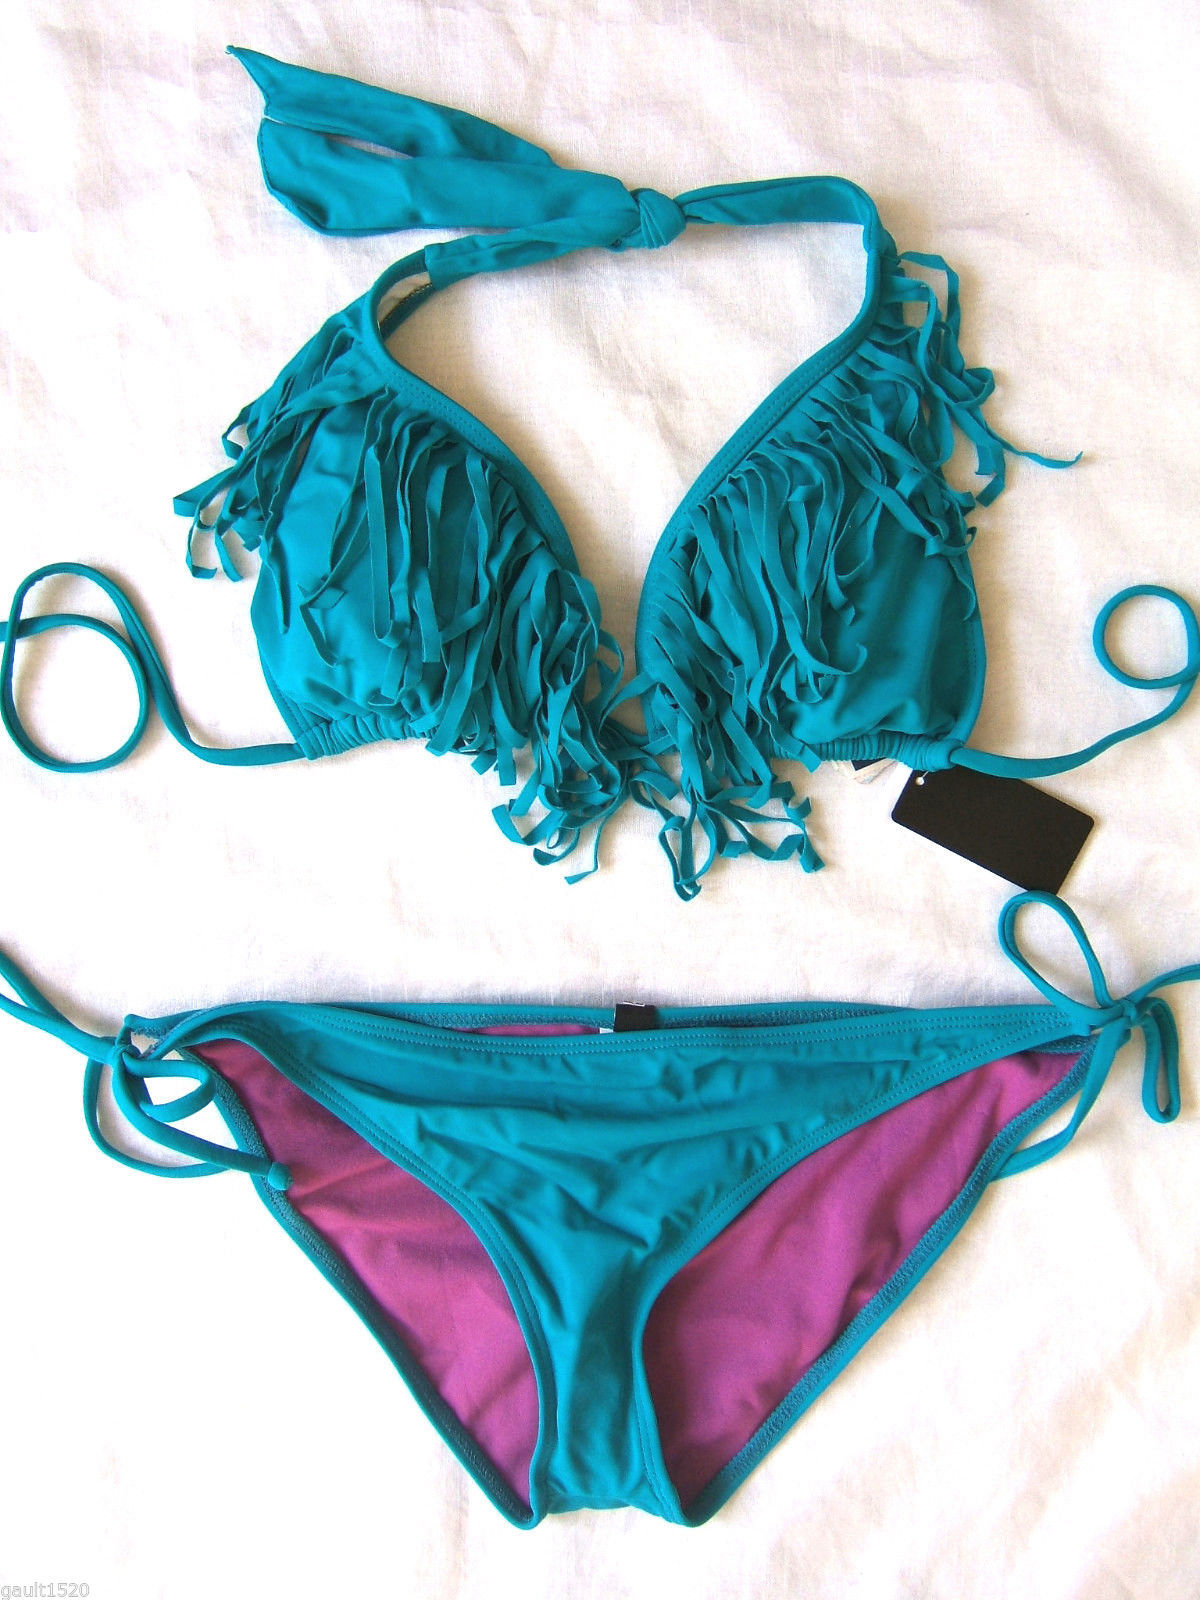 NWT Guess Los Angeles Teal Blue Fringe Halter Tie Bikini Sexy Swim Suit S $148 - $53.40